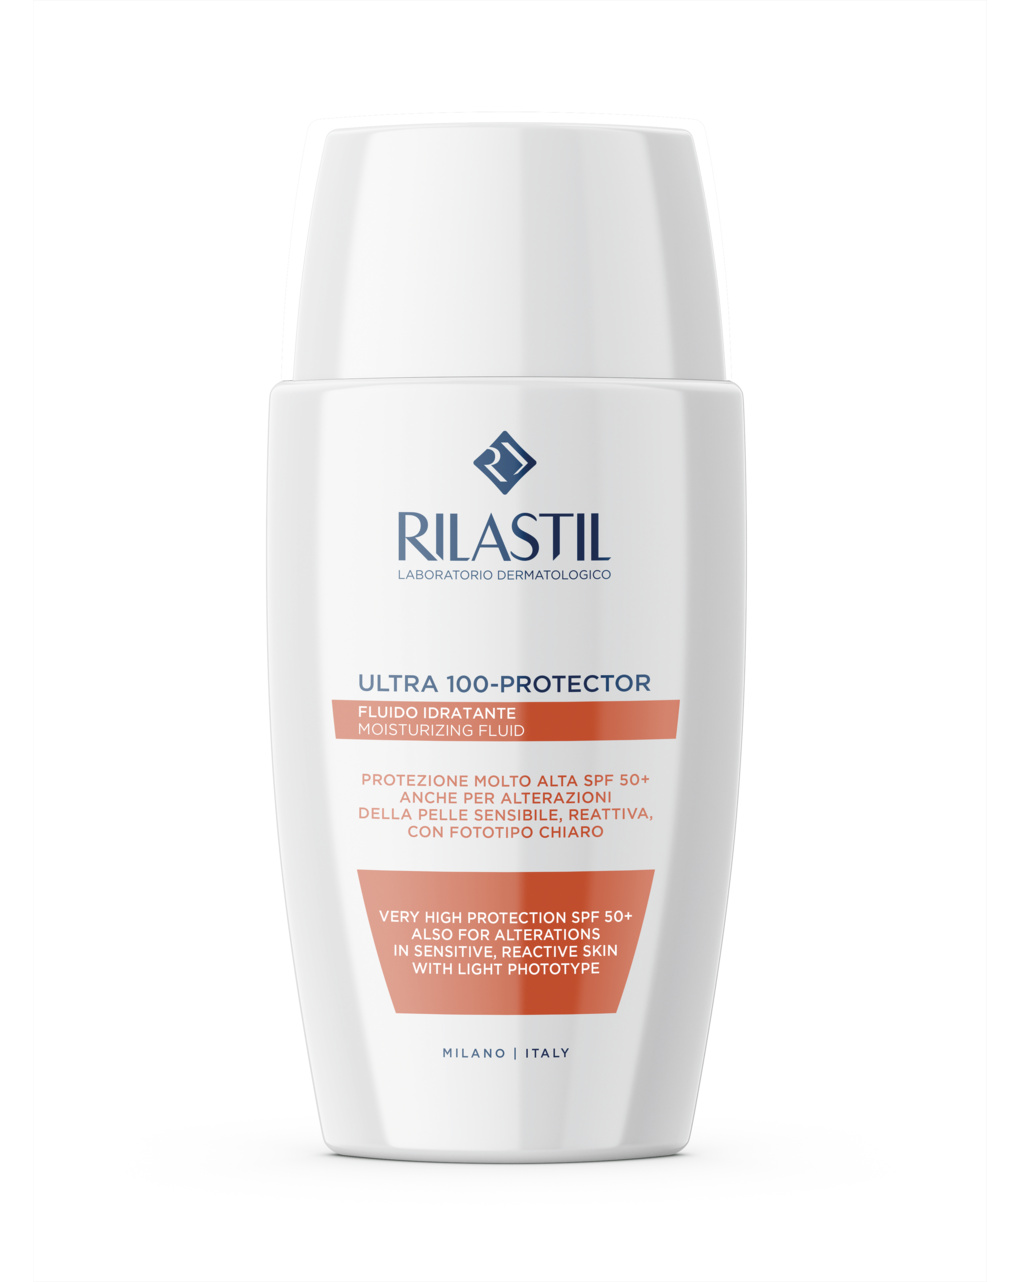 Ultra 100 protector fluido idratante spf 50+ | rilastil - Rilastil